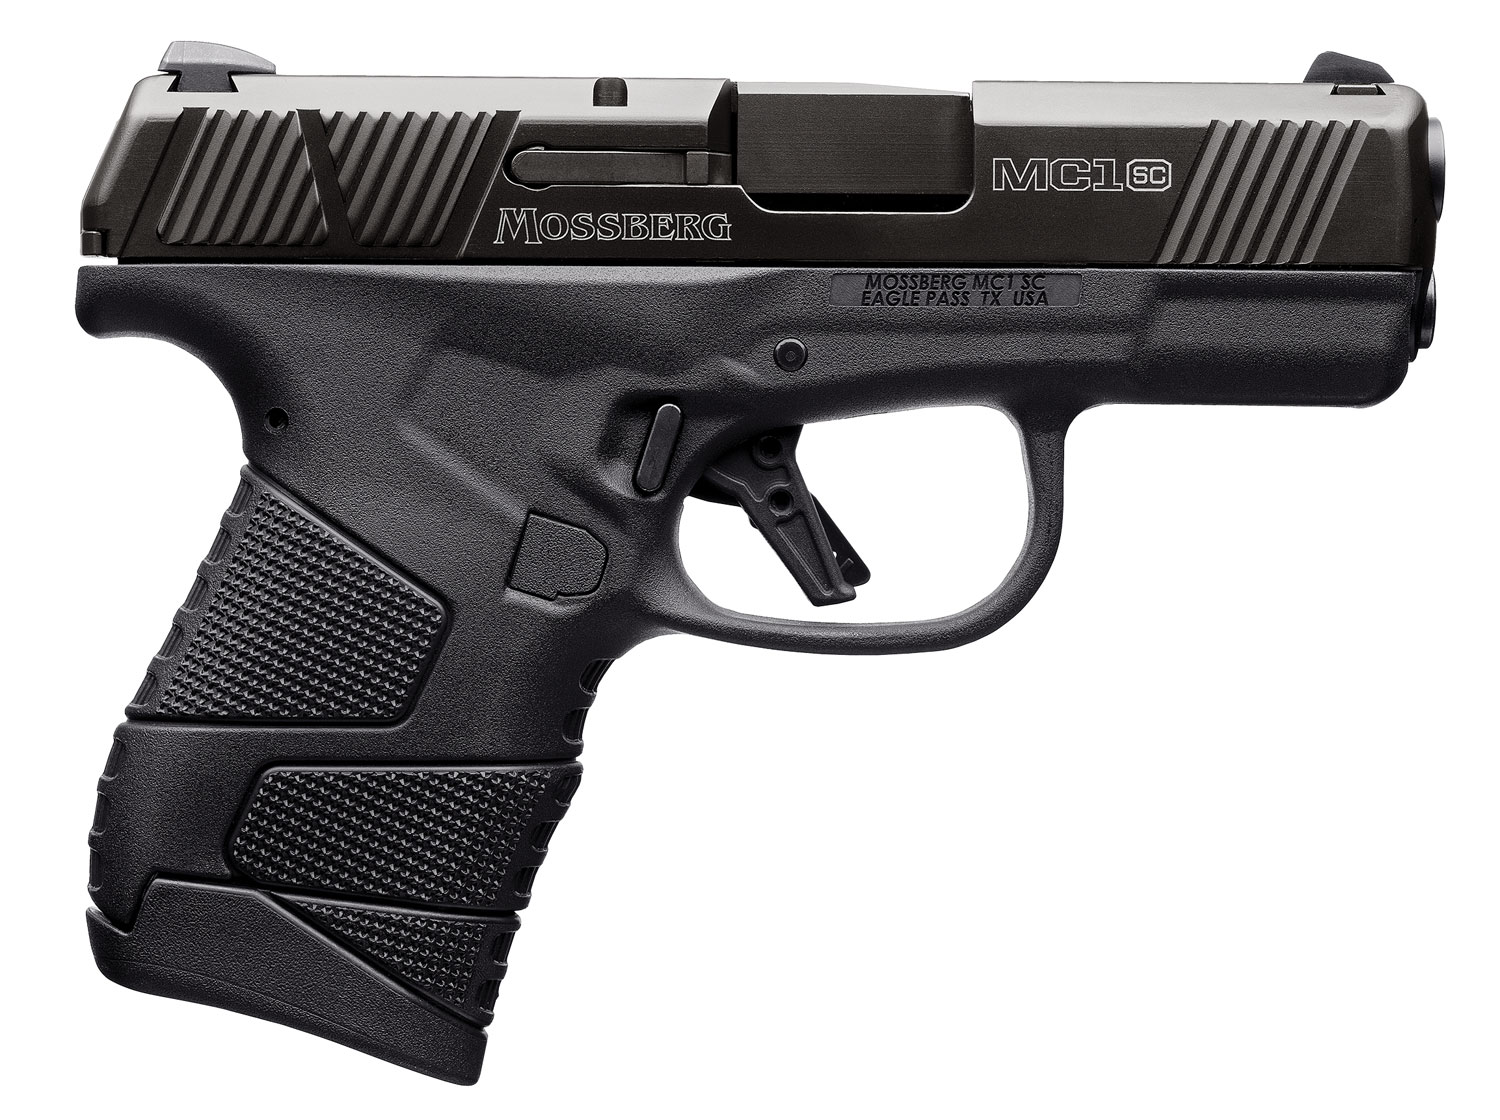 Mossberg MC1 Sub-Compact 9mm Handgun - Manual Safety